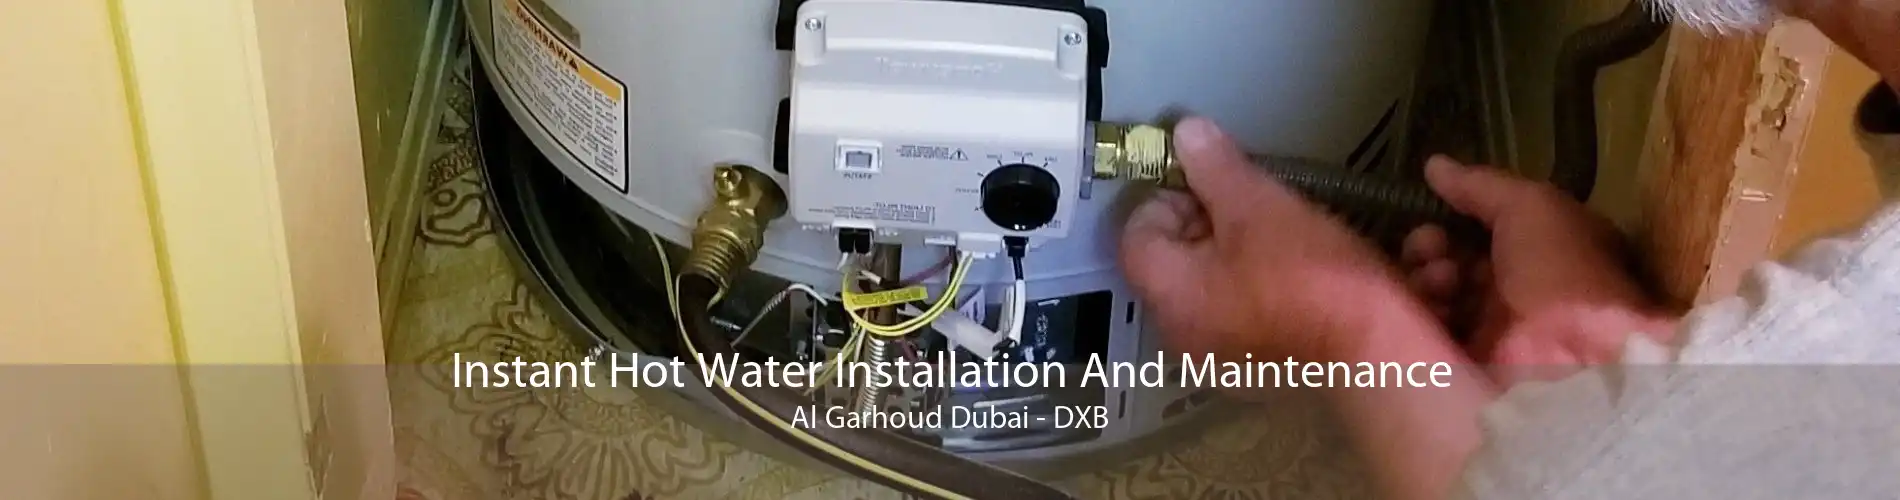 Instant Hot Water Installation And Maintenance Al Garhoud Dubai - DXB